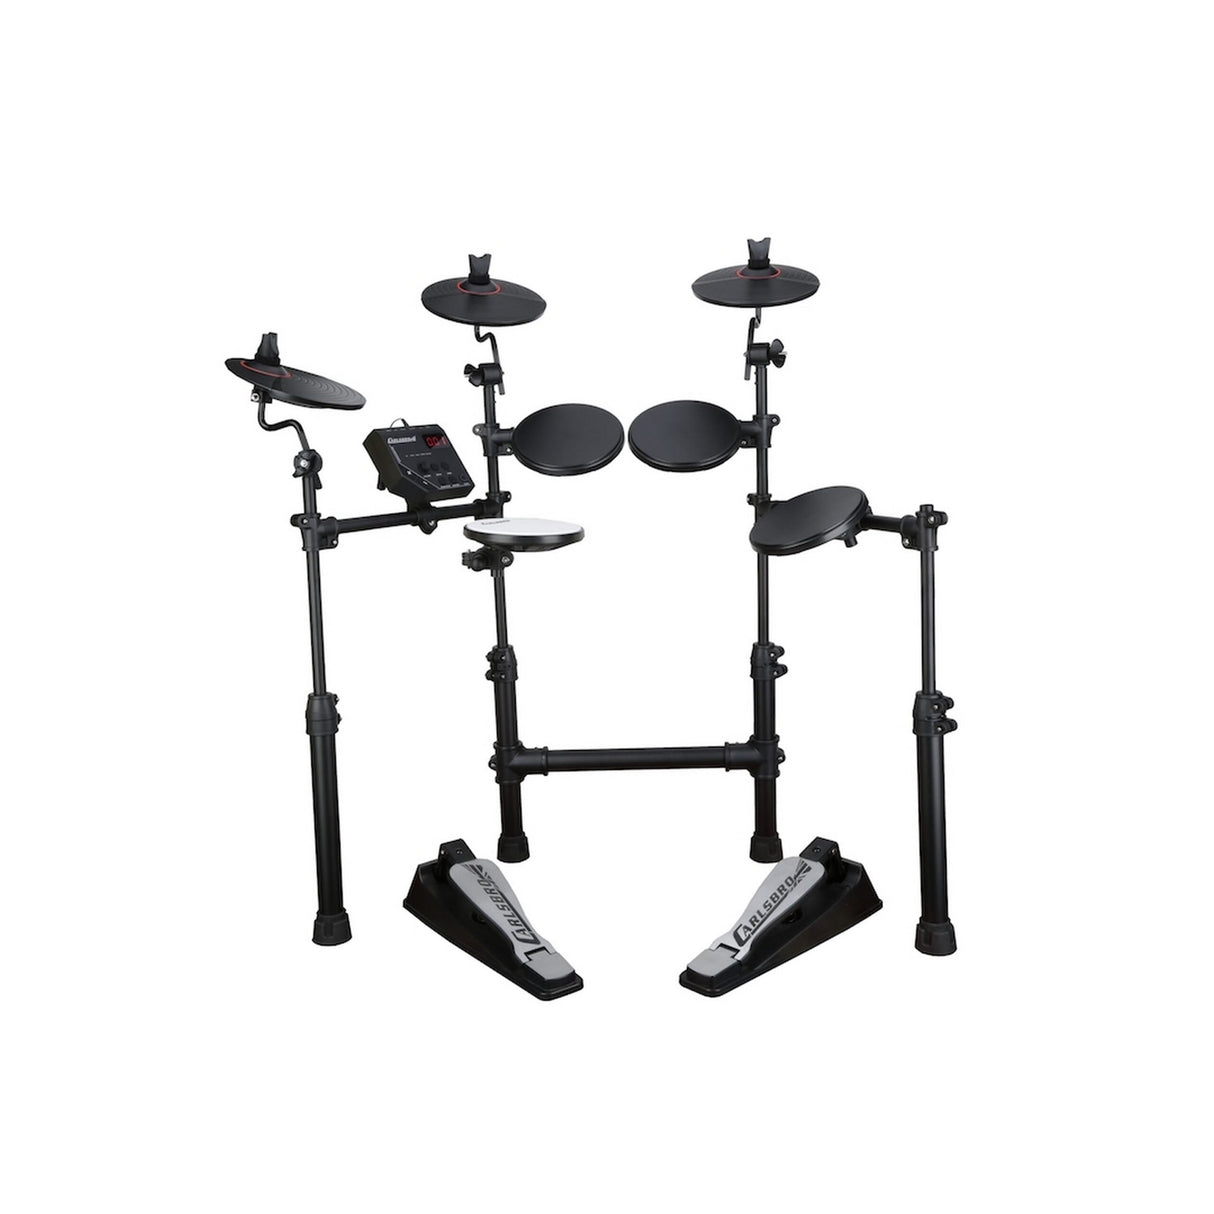 Carlsbro CS D100 Electronic Drum Kit